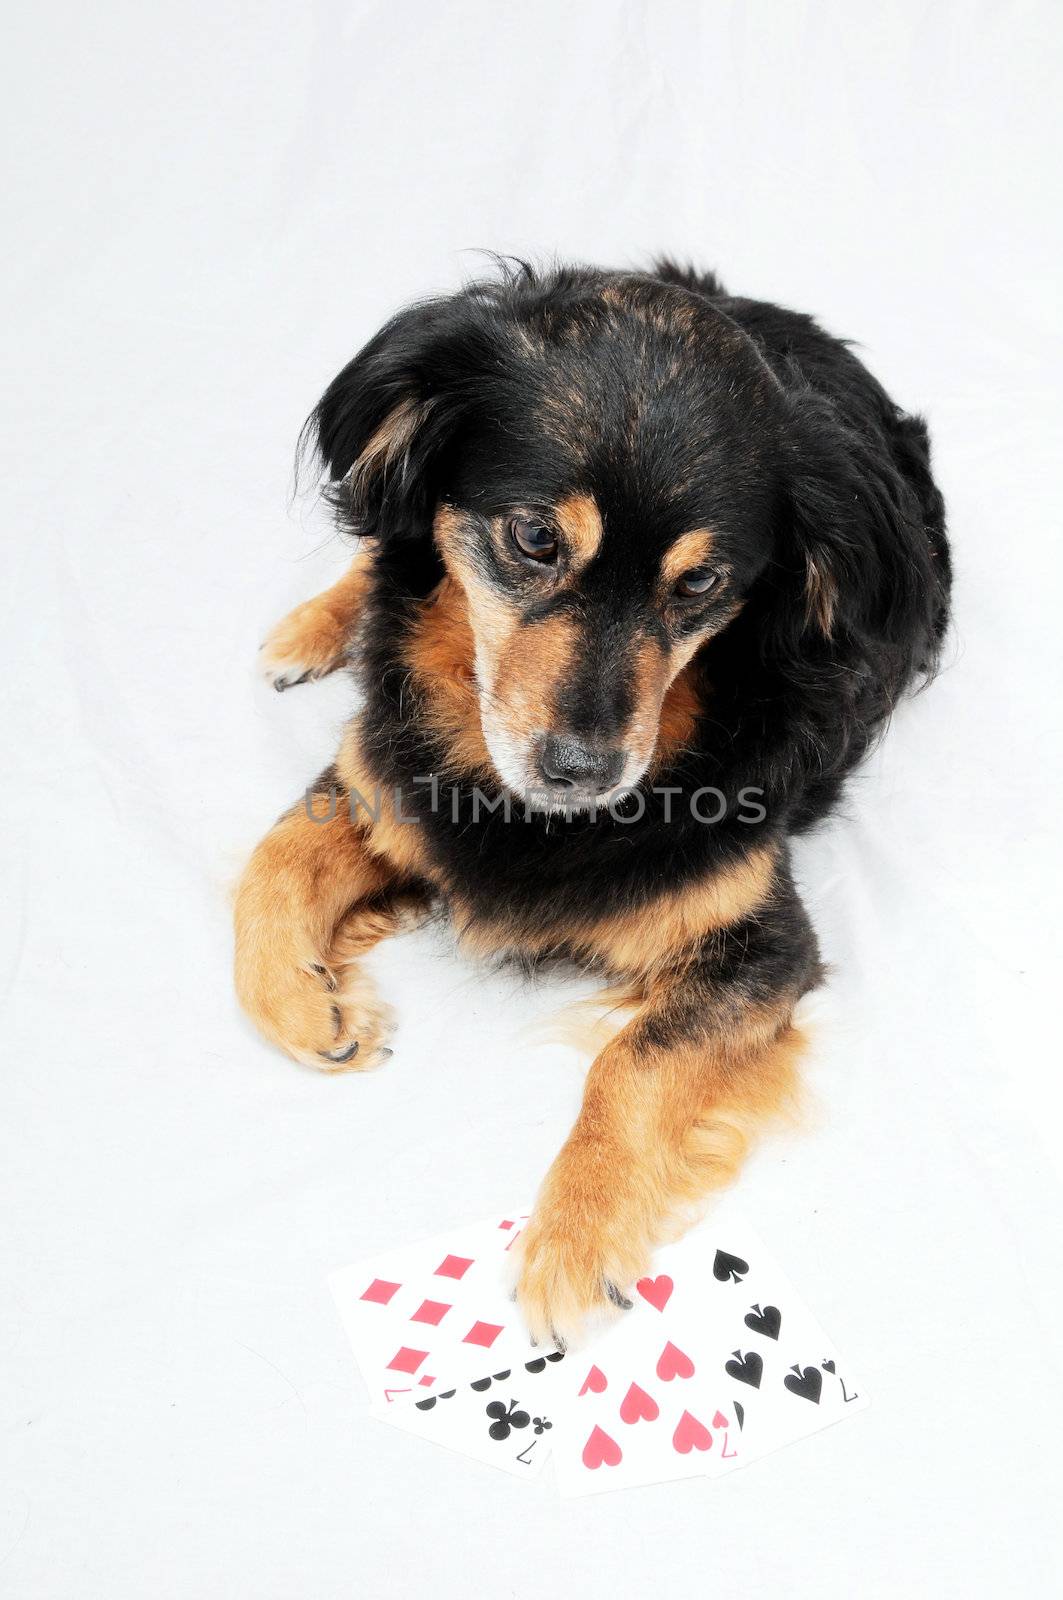 Poker Dog by underworld